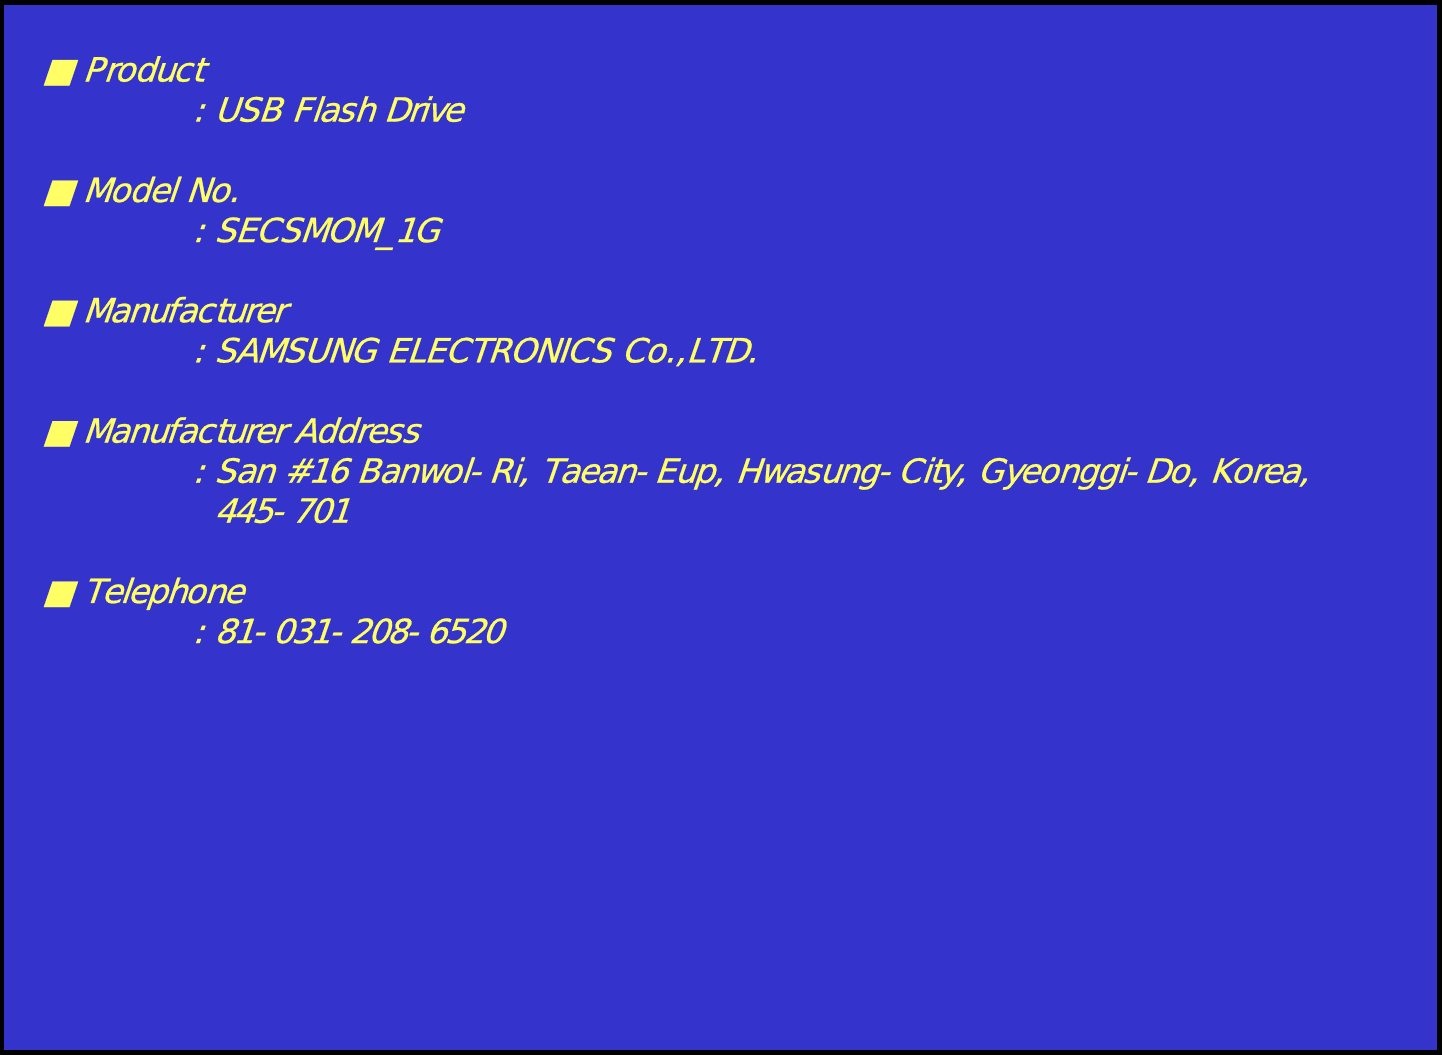 ■Product: USB Flash Drive■ Model No.: SECSMOM_1G■ Manufacturer: SAMSUNG ELECTRONICS Co.,LTD.■ Manufacturer Address: San #16 Banwol-Ri, Taean-Eup, Hwasung-City, Gyeonggi-Do, Korea,445-701■Telephone: 81-031-208-6520